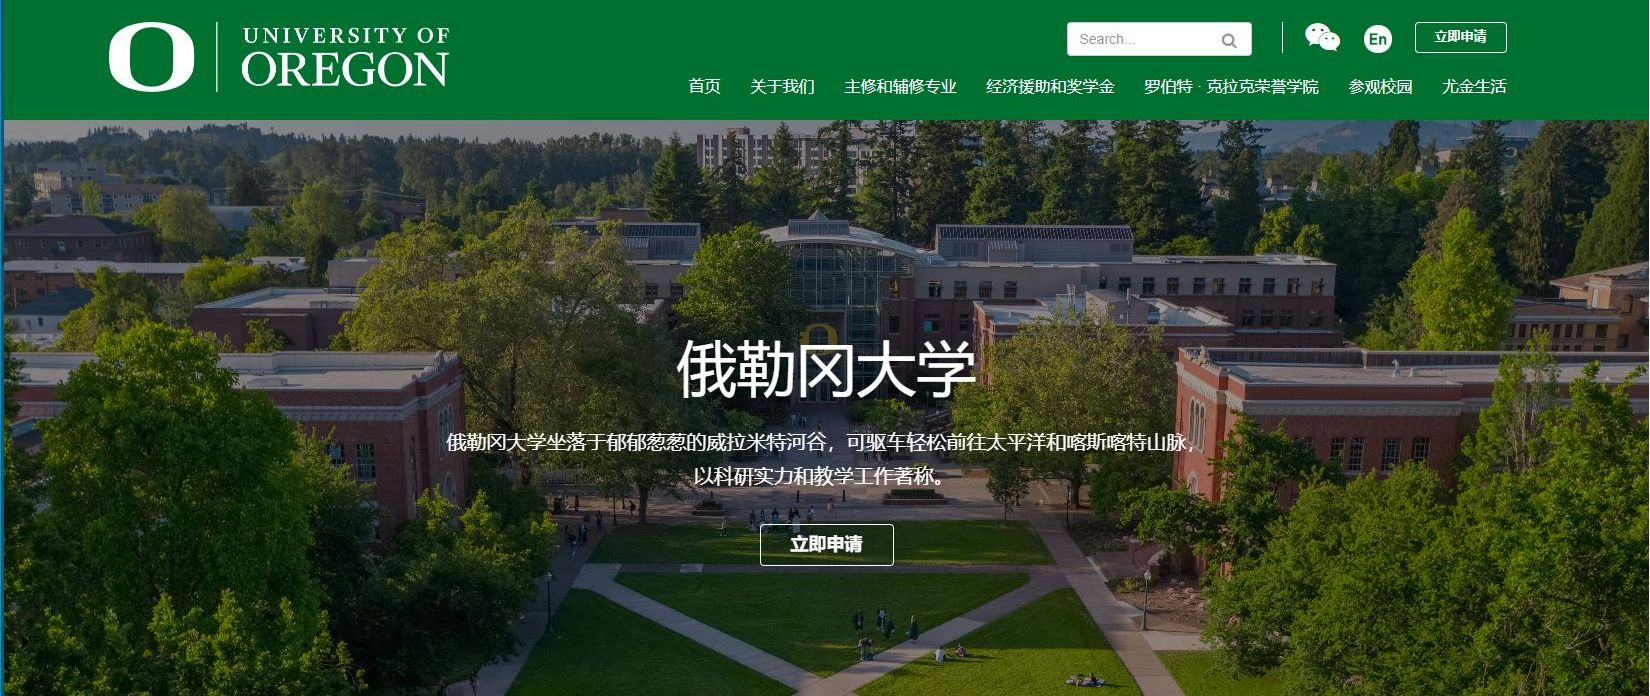 University of Oregon Launches Chinese Website